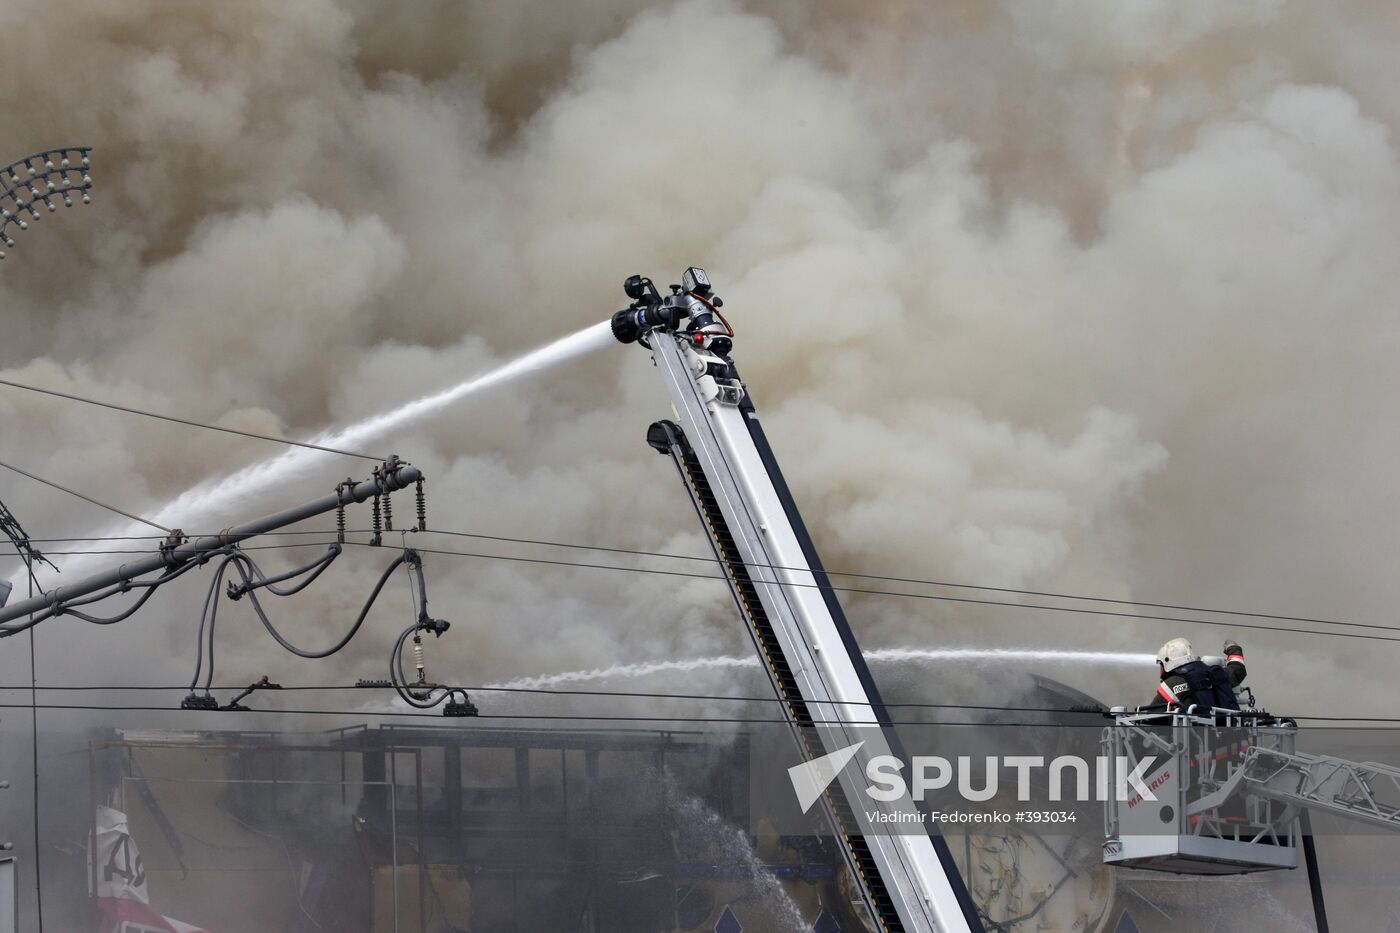 Fire crews battling slot machine club blaze in Moscow